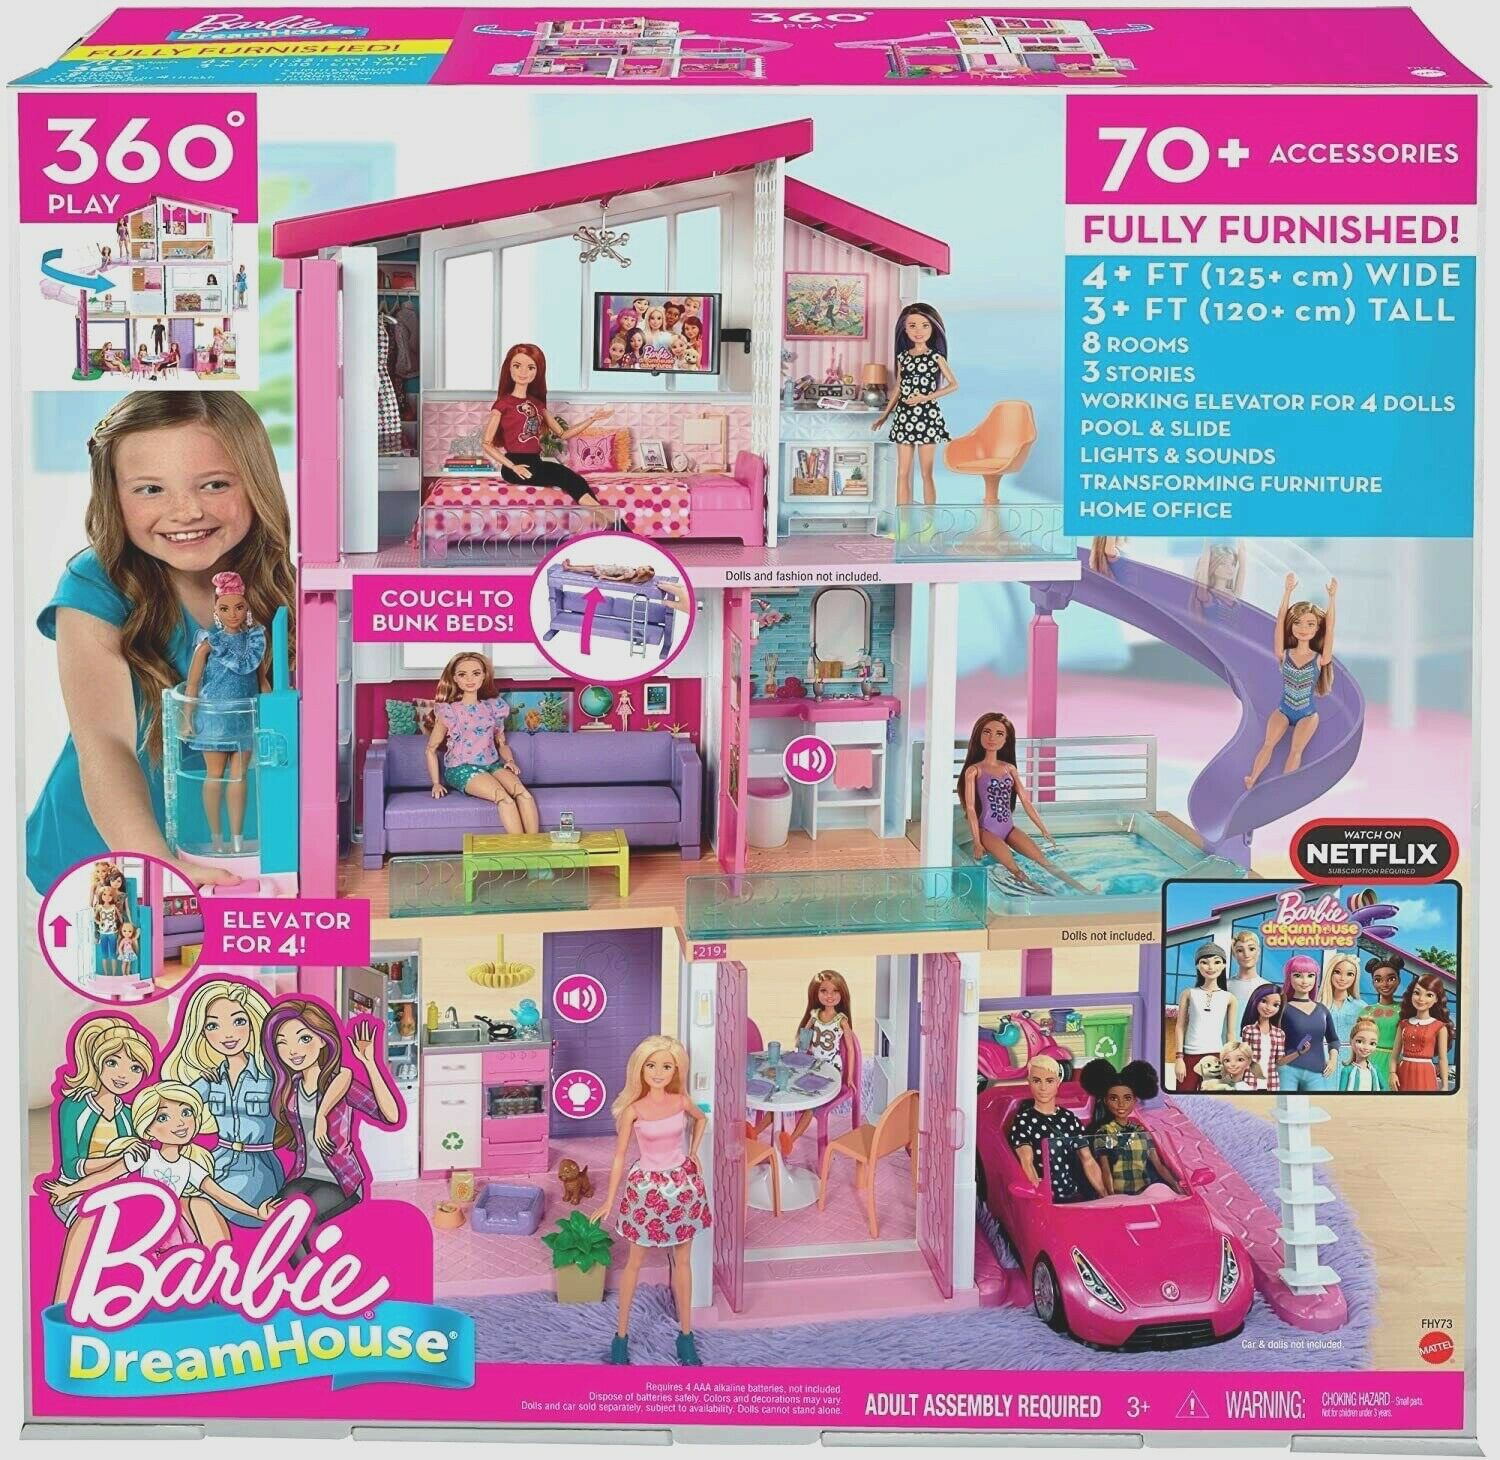 NEW Barbie Dreamhouse Playset